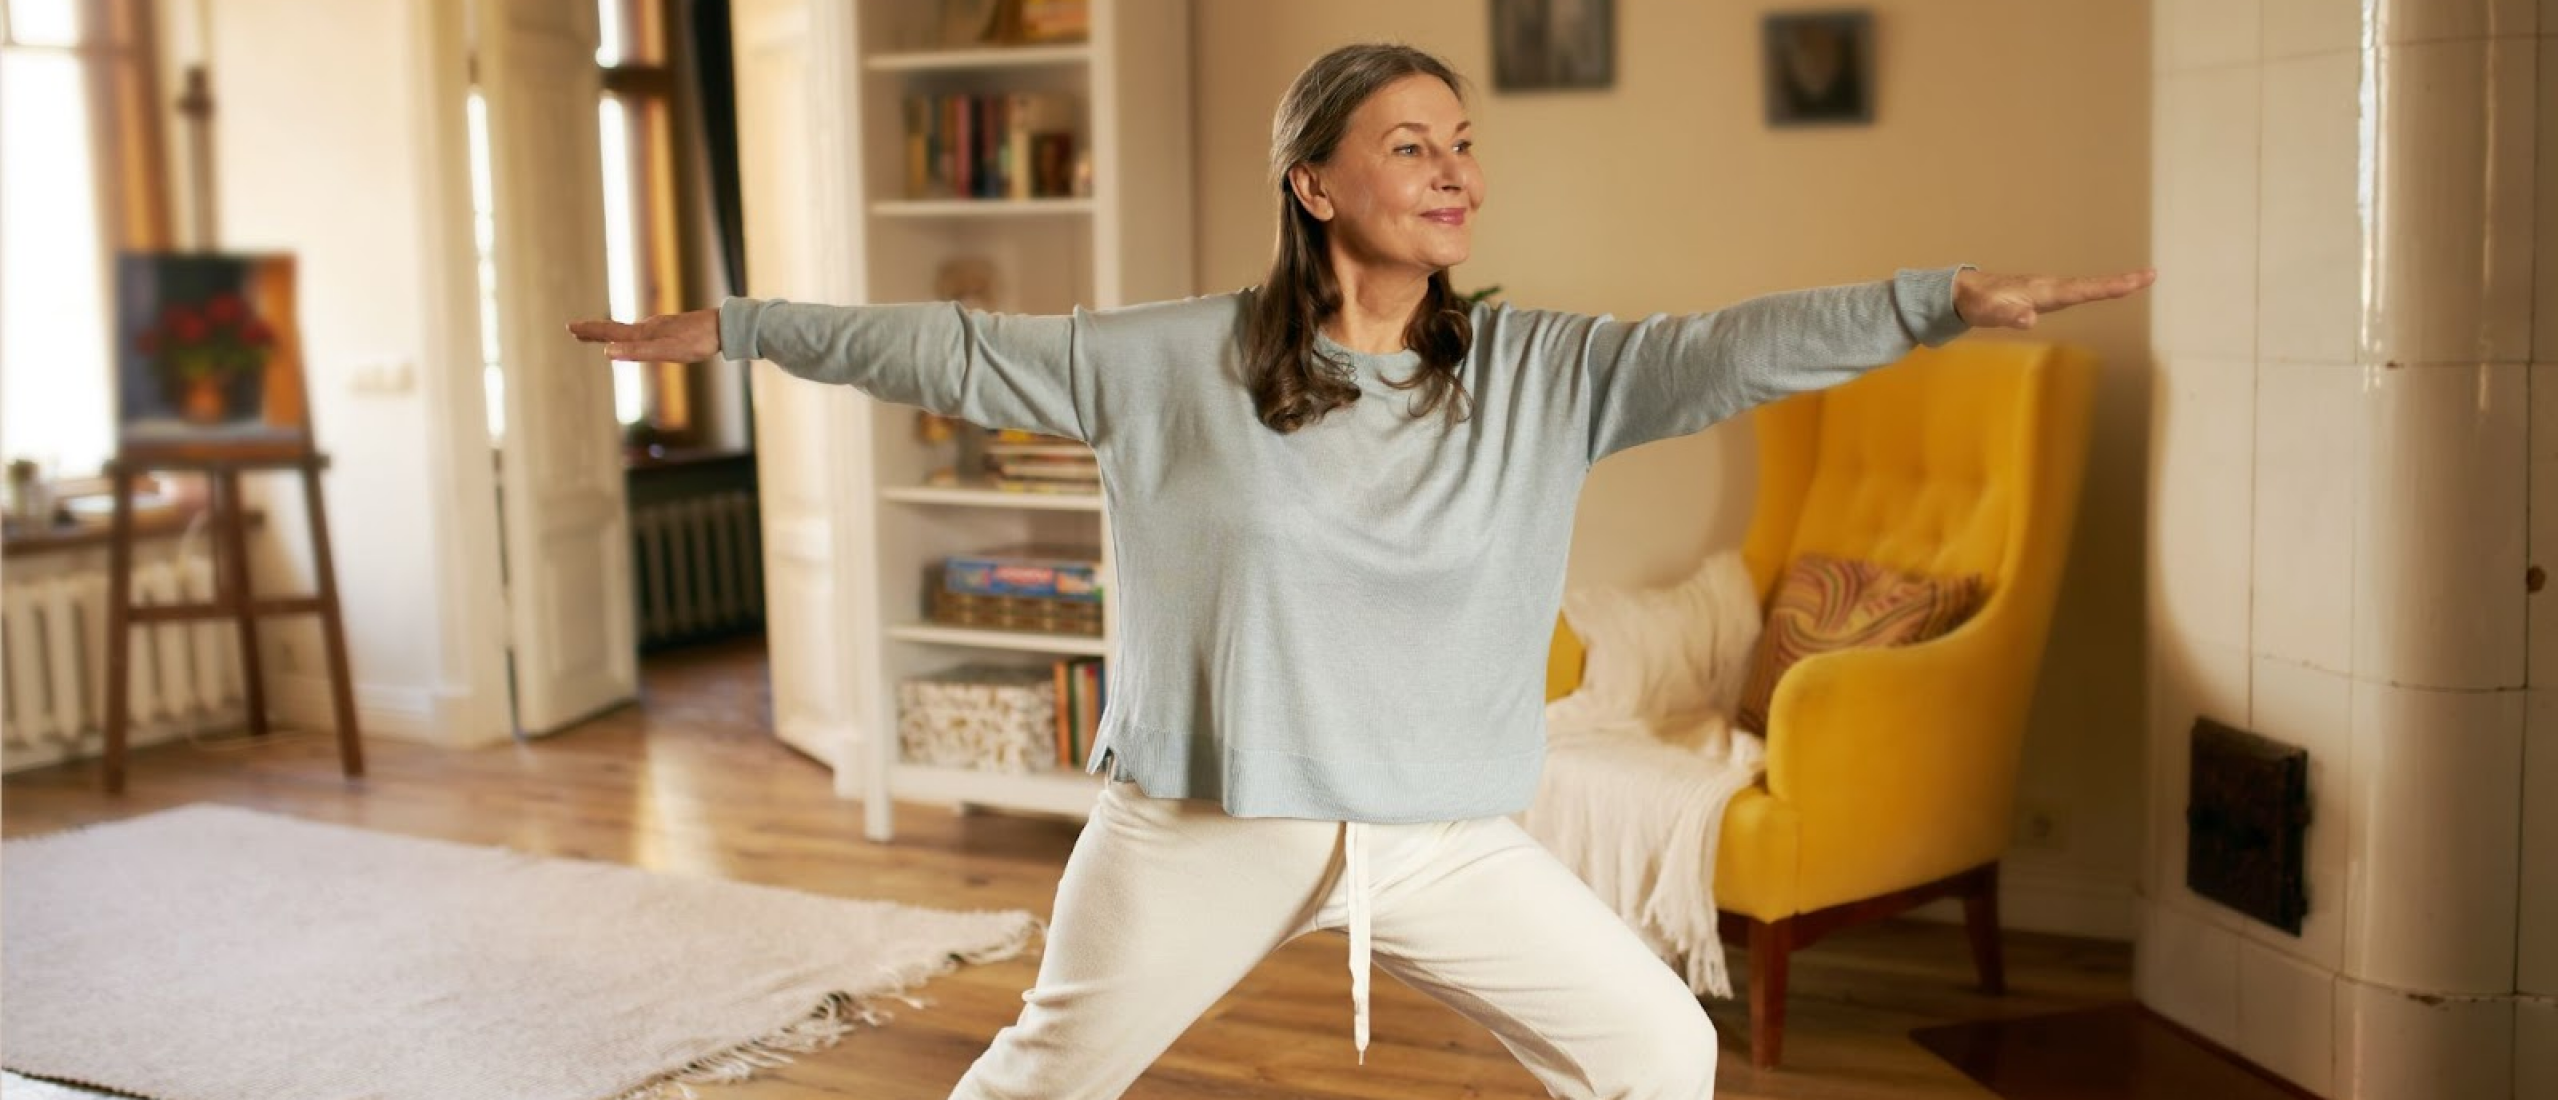 Kundalini Yoga: Balancing Safety and stress reduction